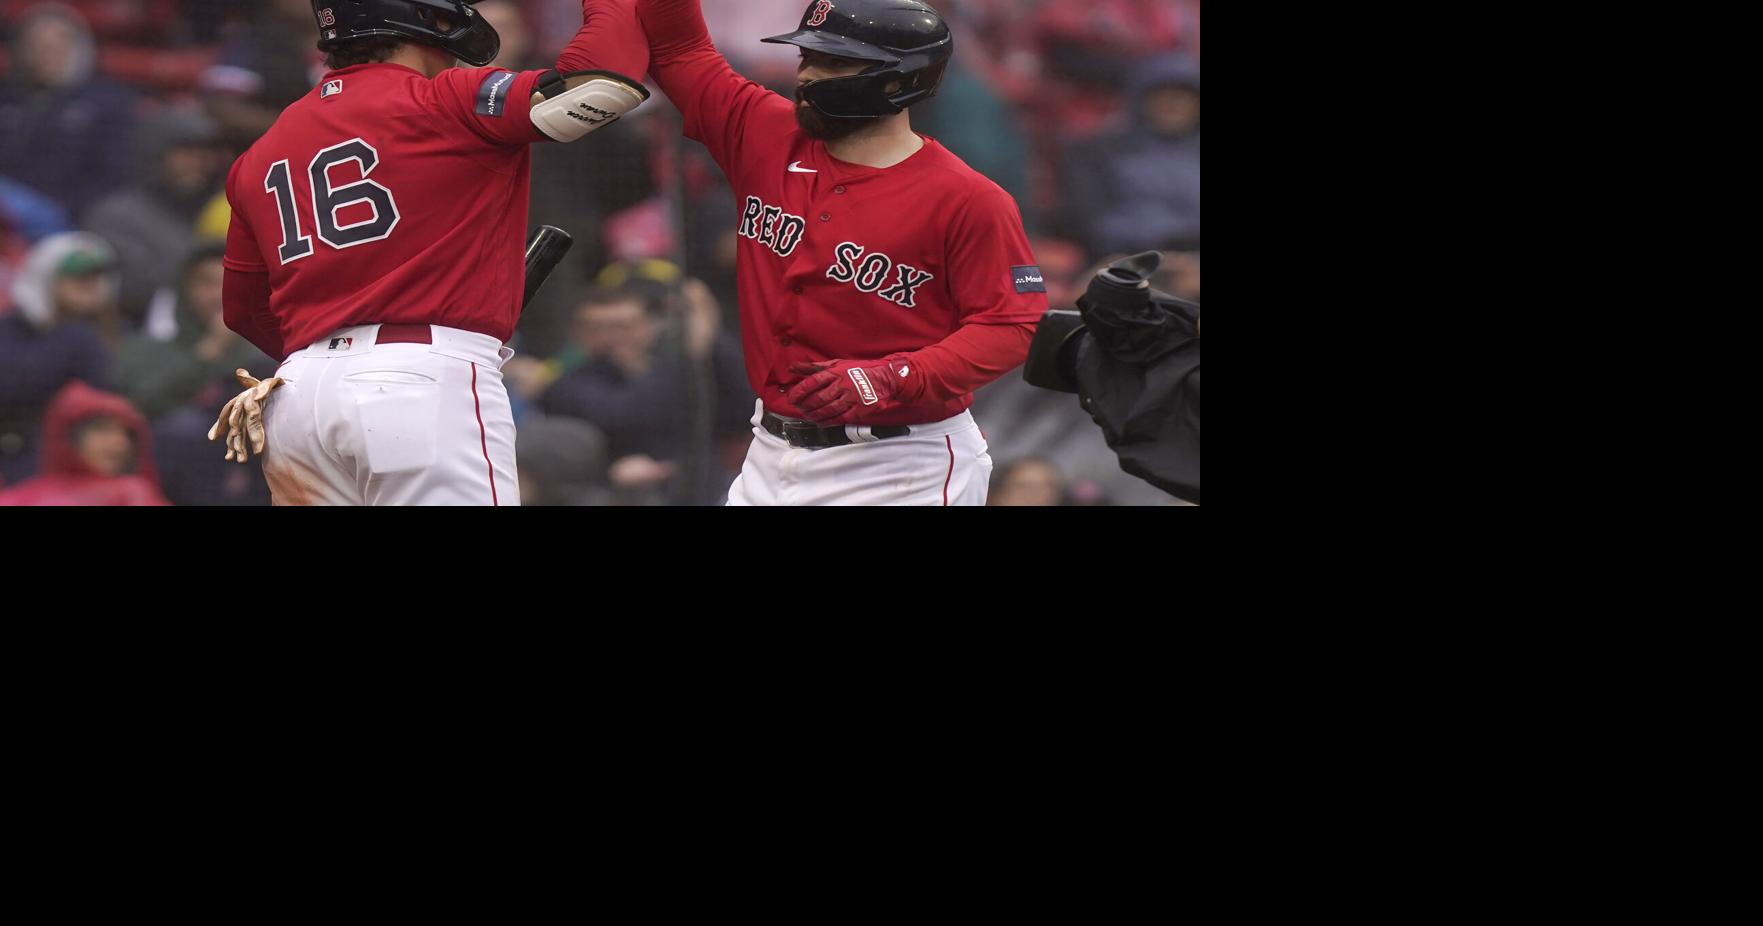 Masataka Yoshida's strong showing includes three-run homer in Red Sox' win  - The Boston Globe